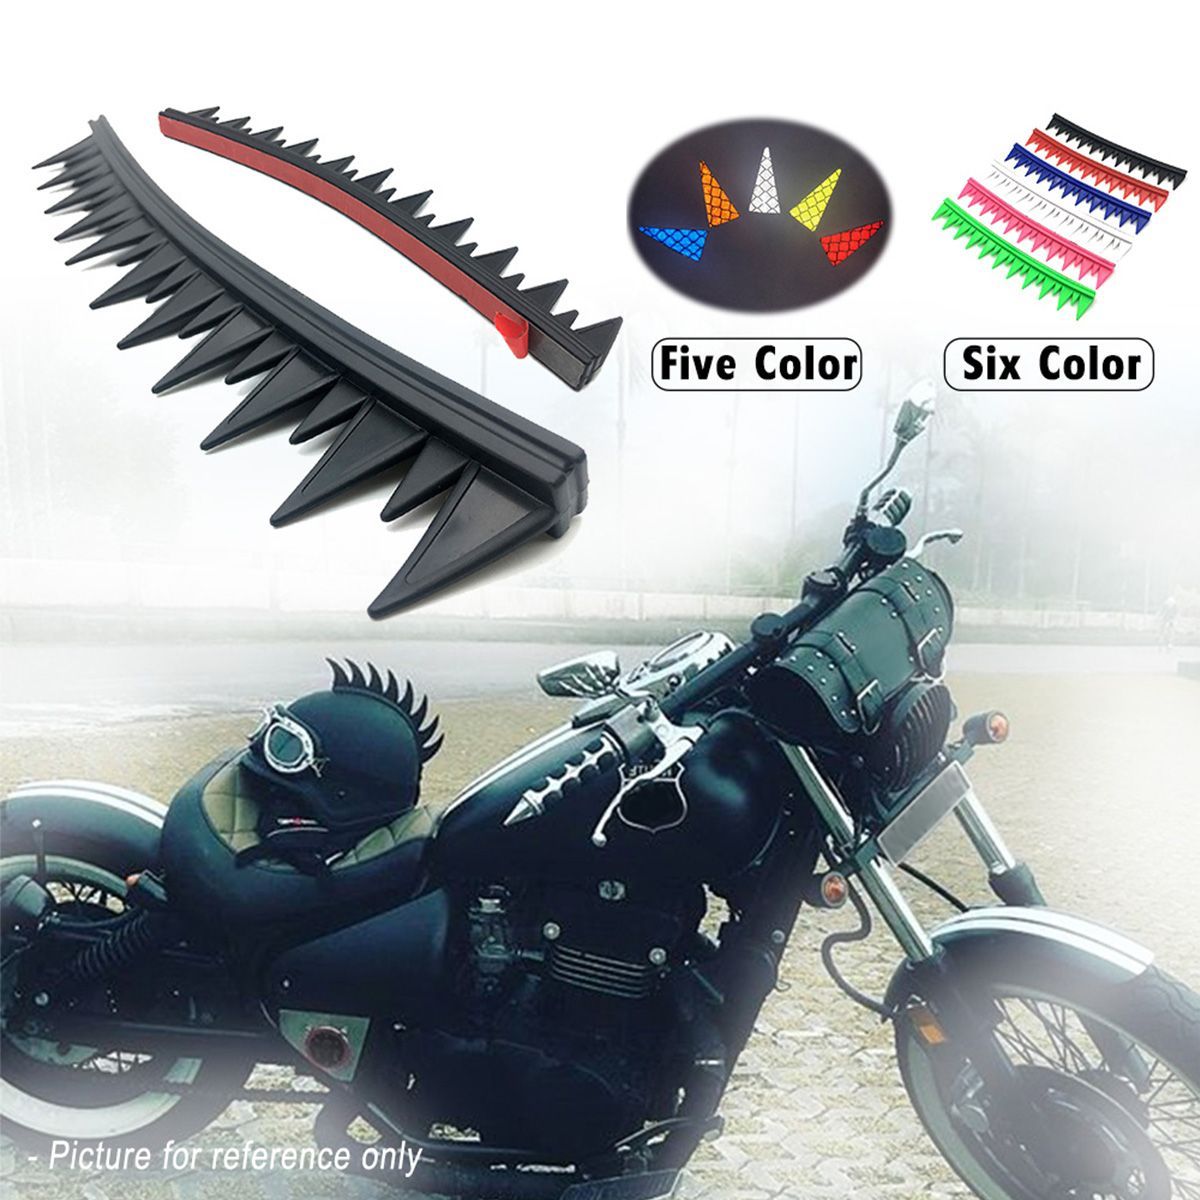 Rubber-Motorcycle-Dirt-Biker-Decals-Sticker-For-Helmets-Mohawks-Mohawk-Spikes-1564070